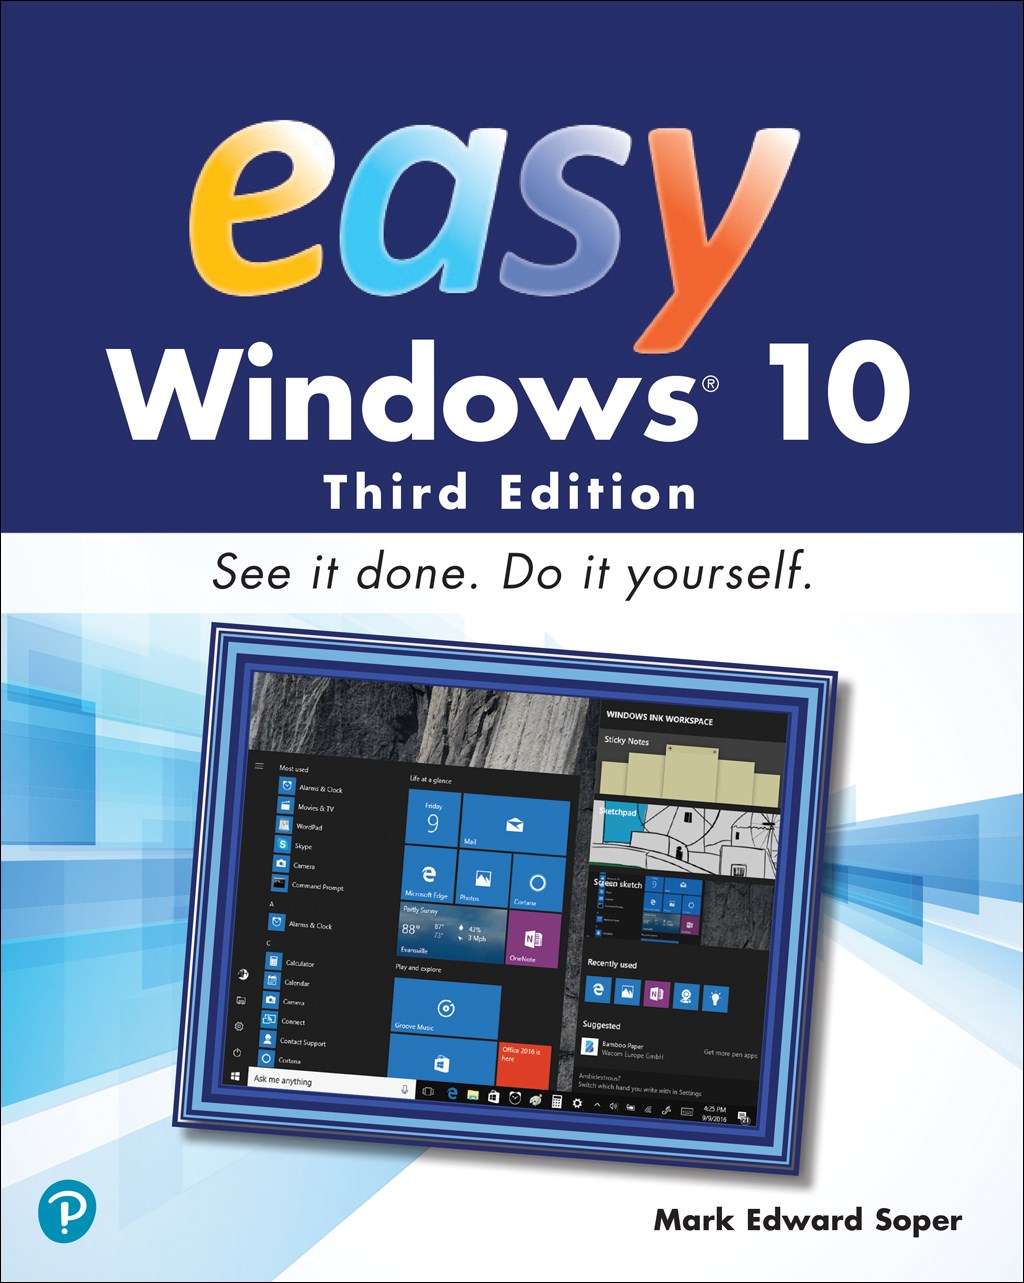 Easy Windows 10, 2nd Edition